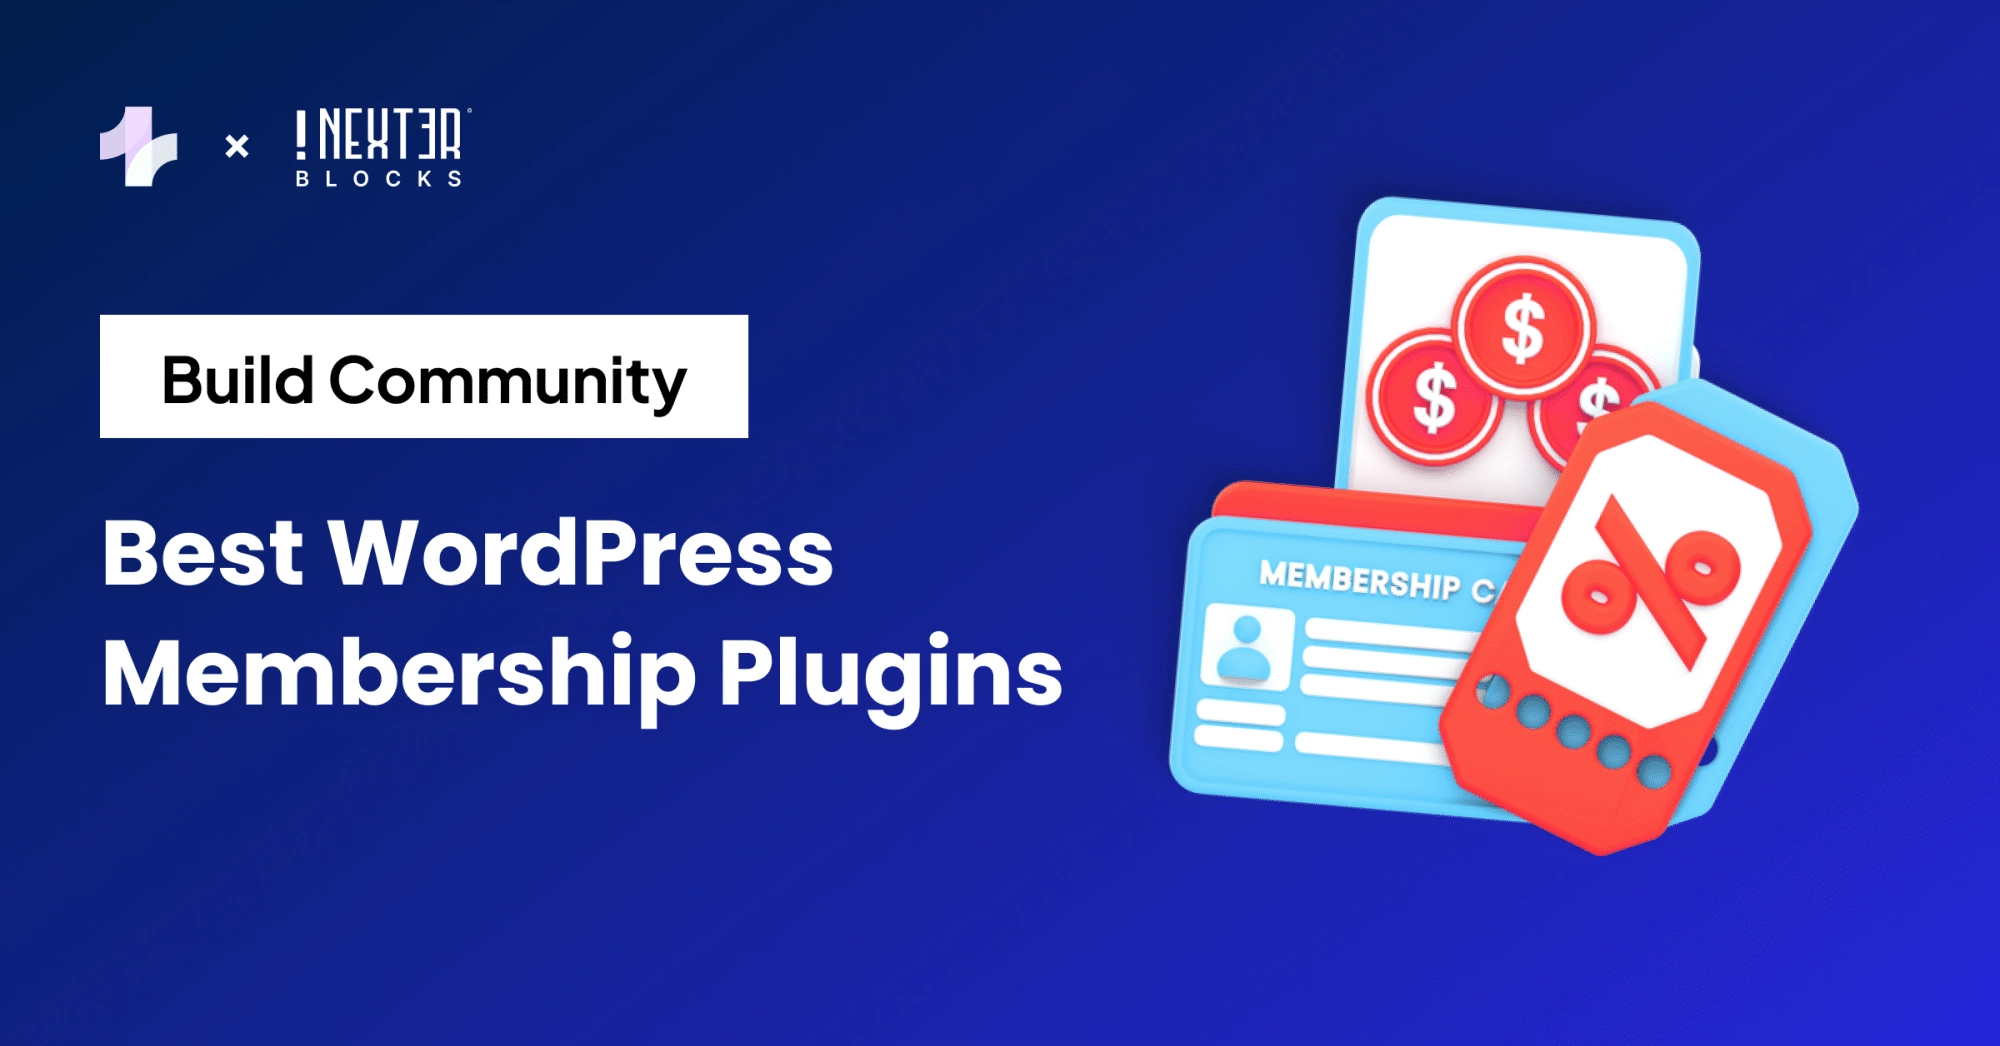 image 48 - 5 Best WordPress Membership Plugins [Build Community]